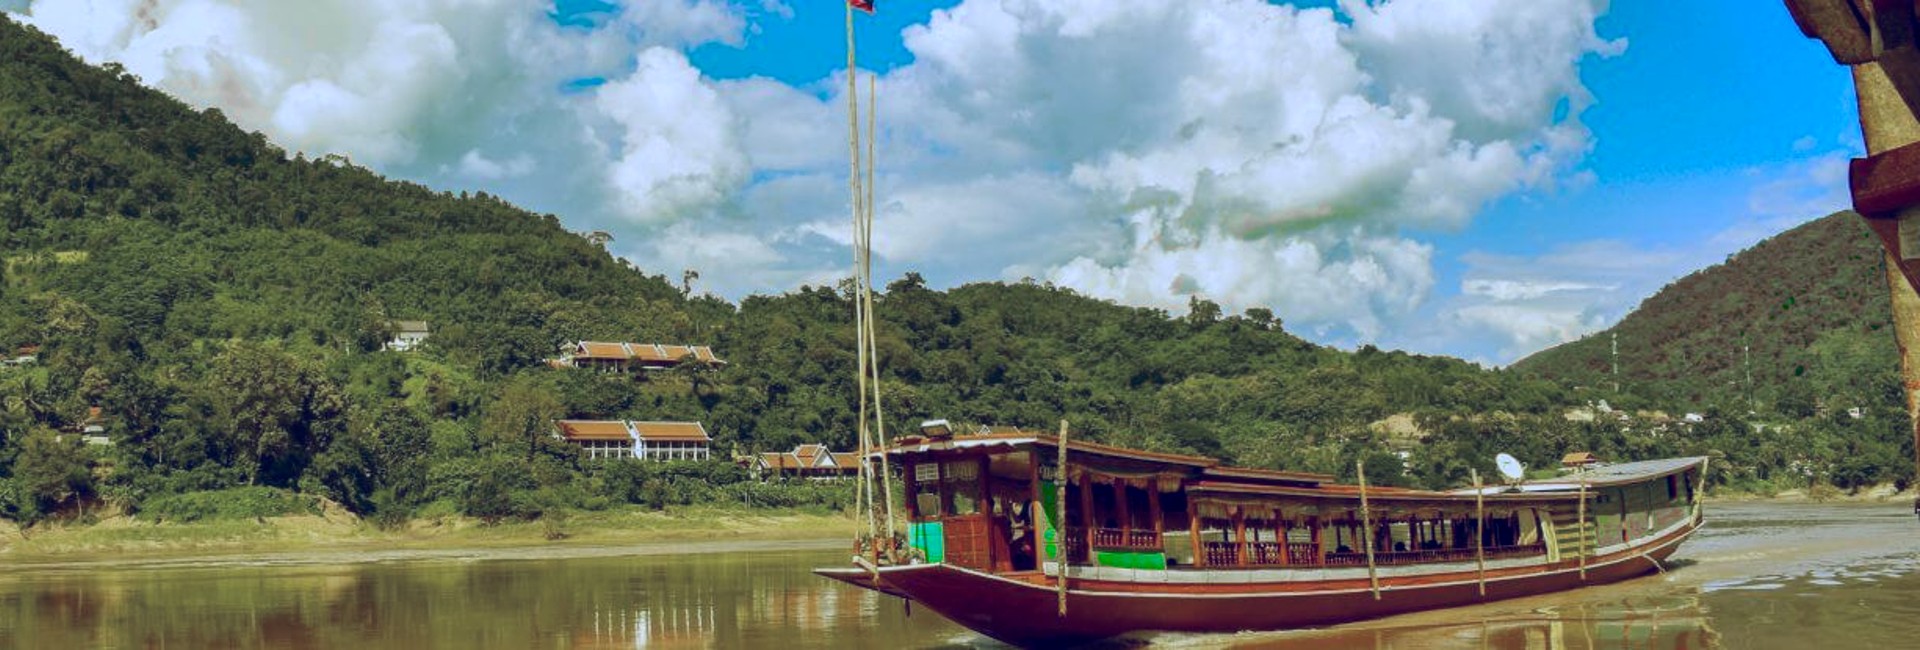 Luang Prabang slowboat - Le Grand Cruise